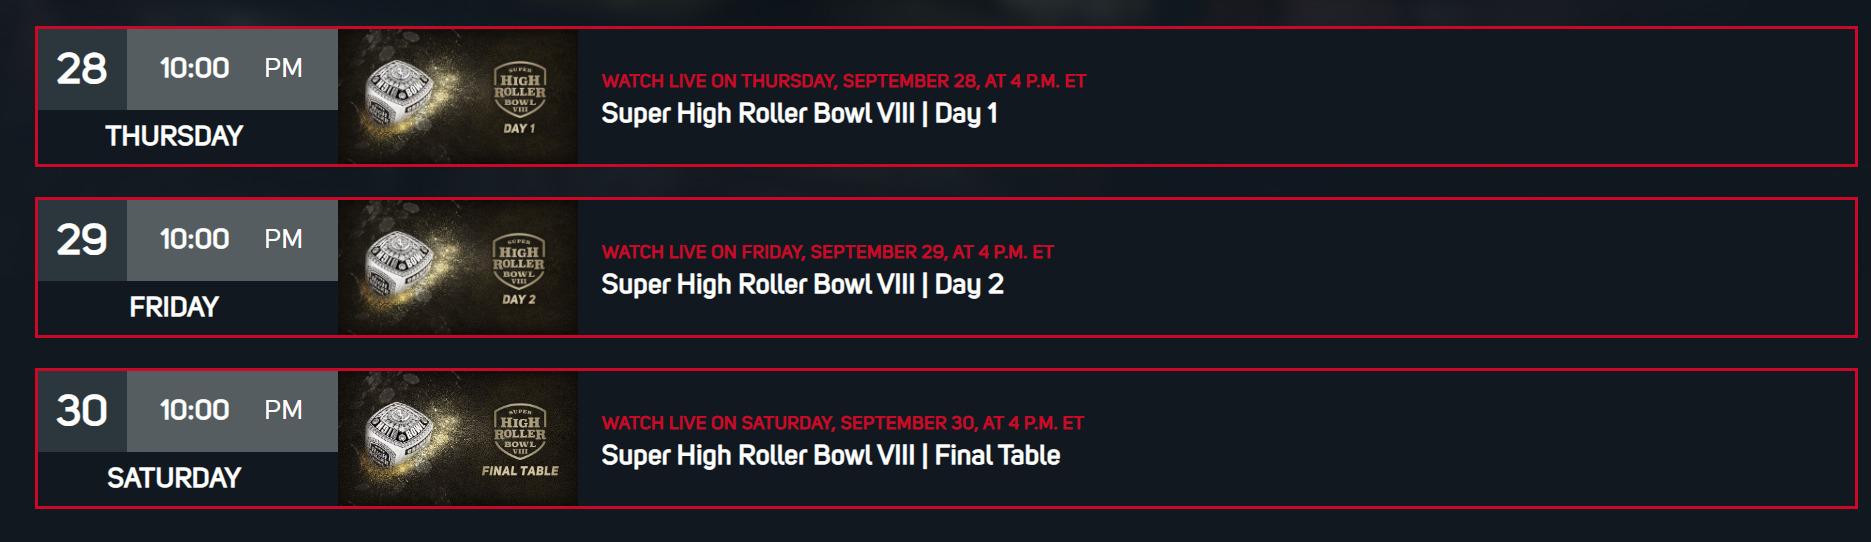 Super High Roller Bowl VIII Schedule